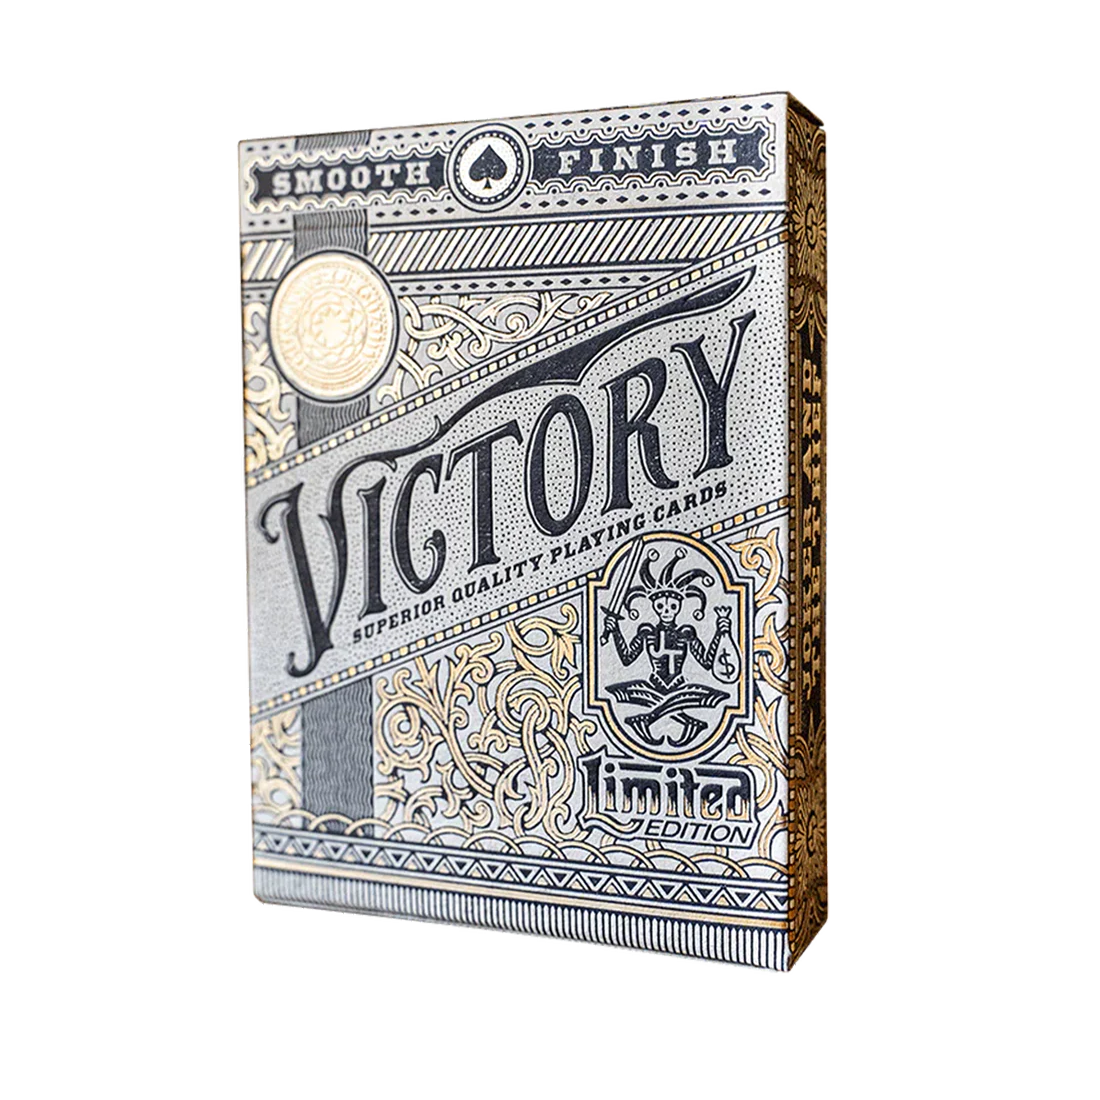 Victory Spillekort